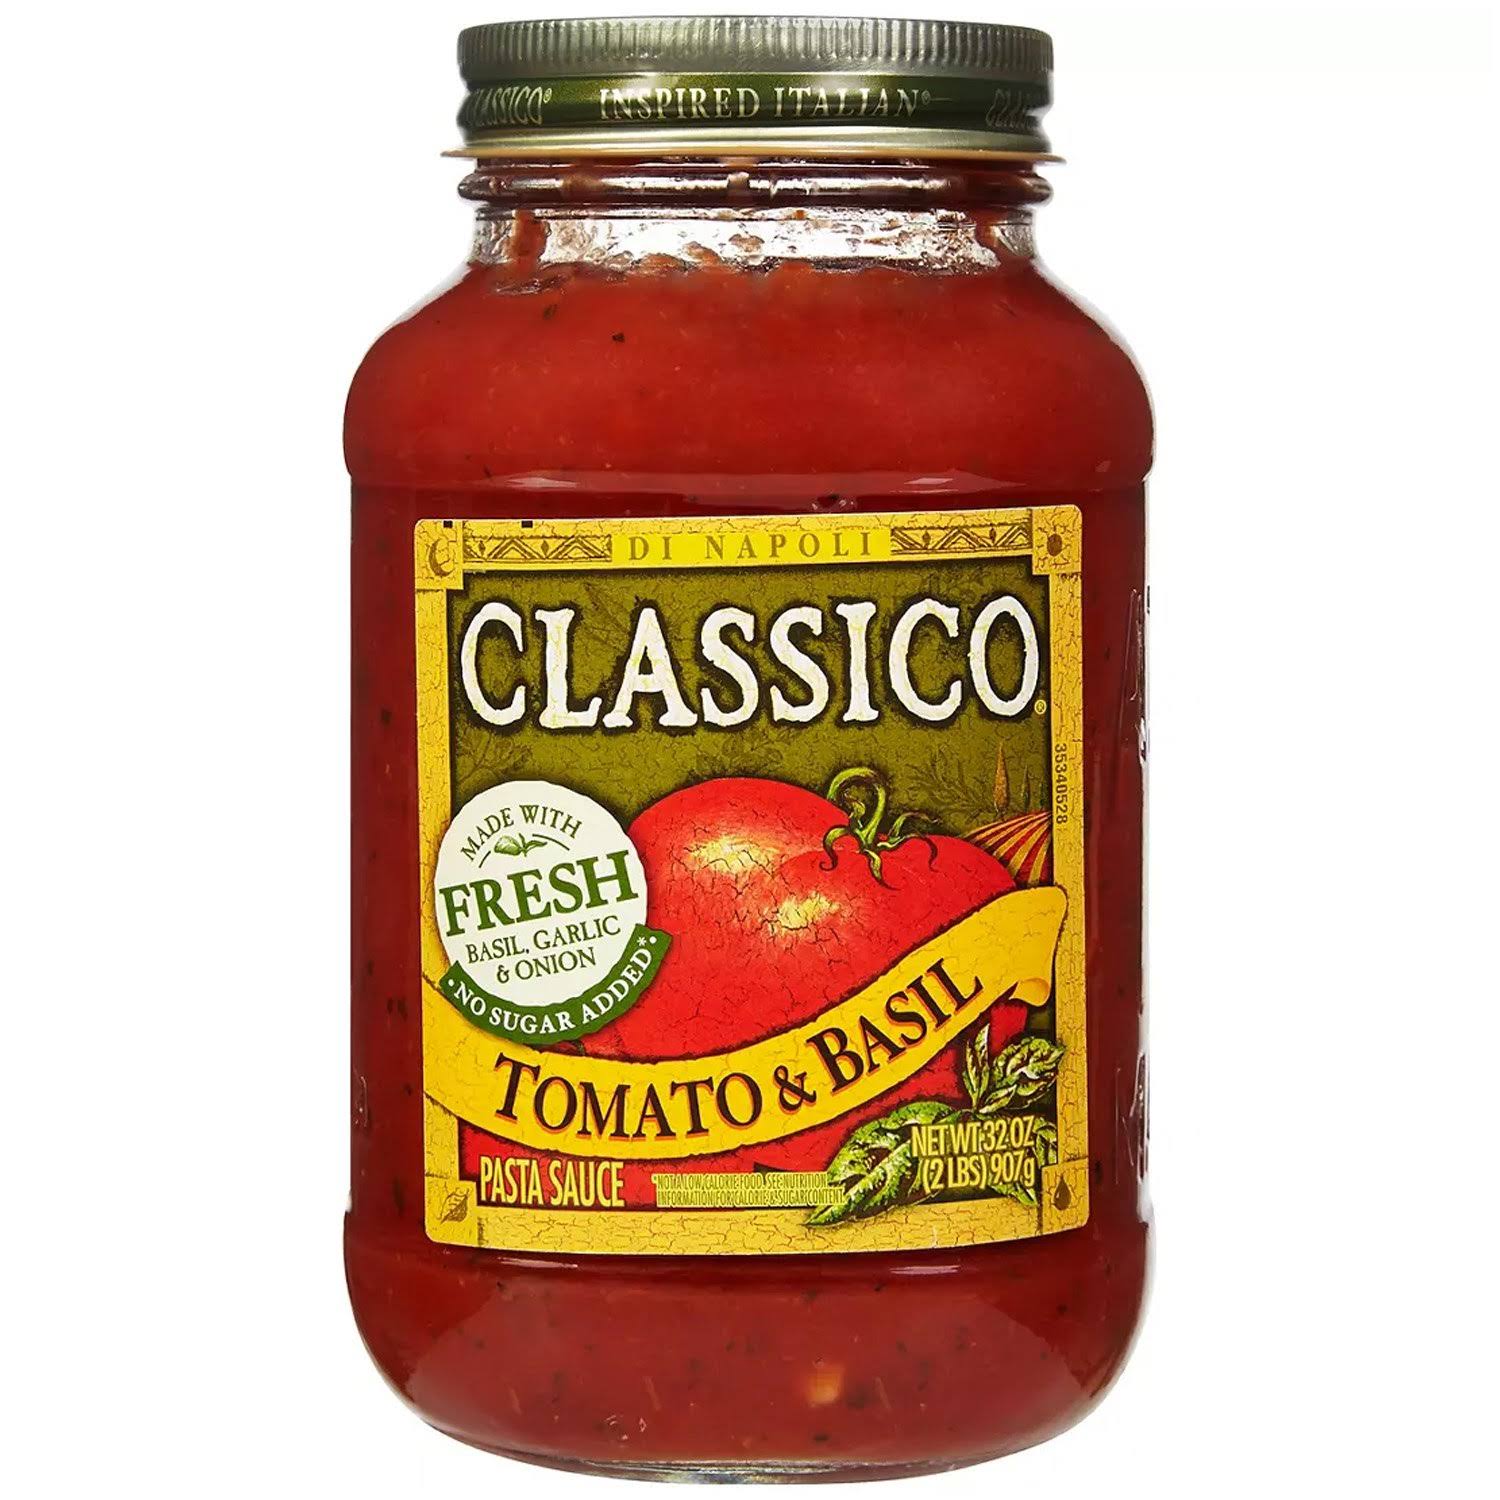 Classico Pasta Sauce, Tomato & Basil - 3 sauce, 32 oz